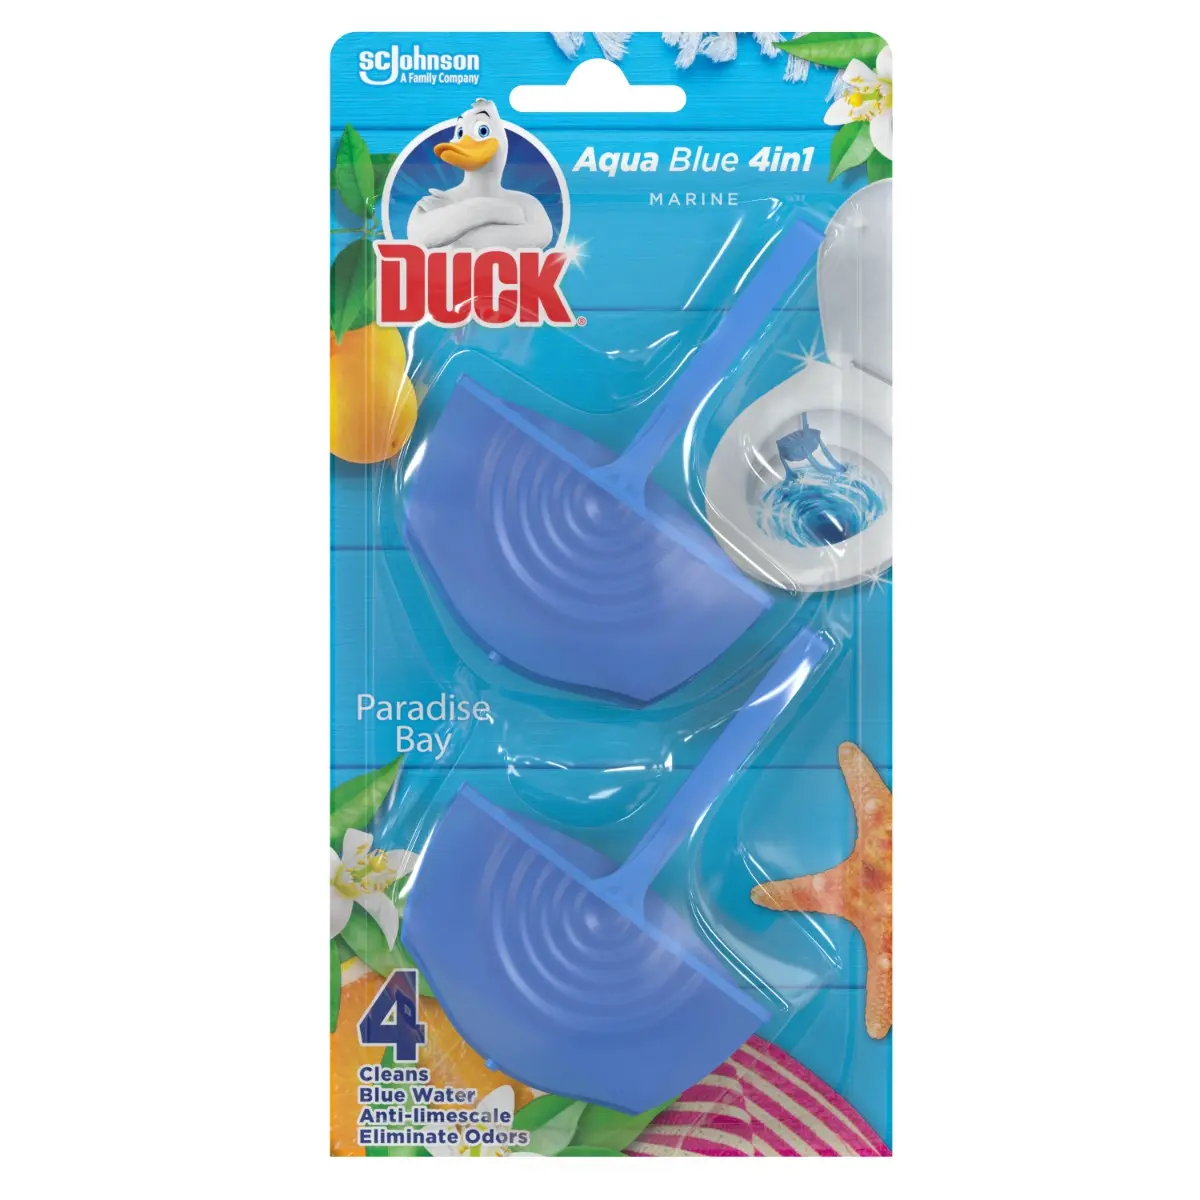 Odorizant wc Duck Aqua Blue 4in1, 2x40g